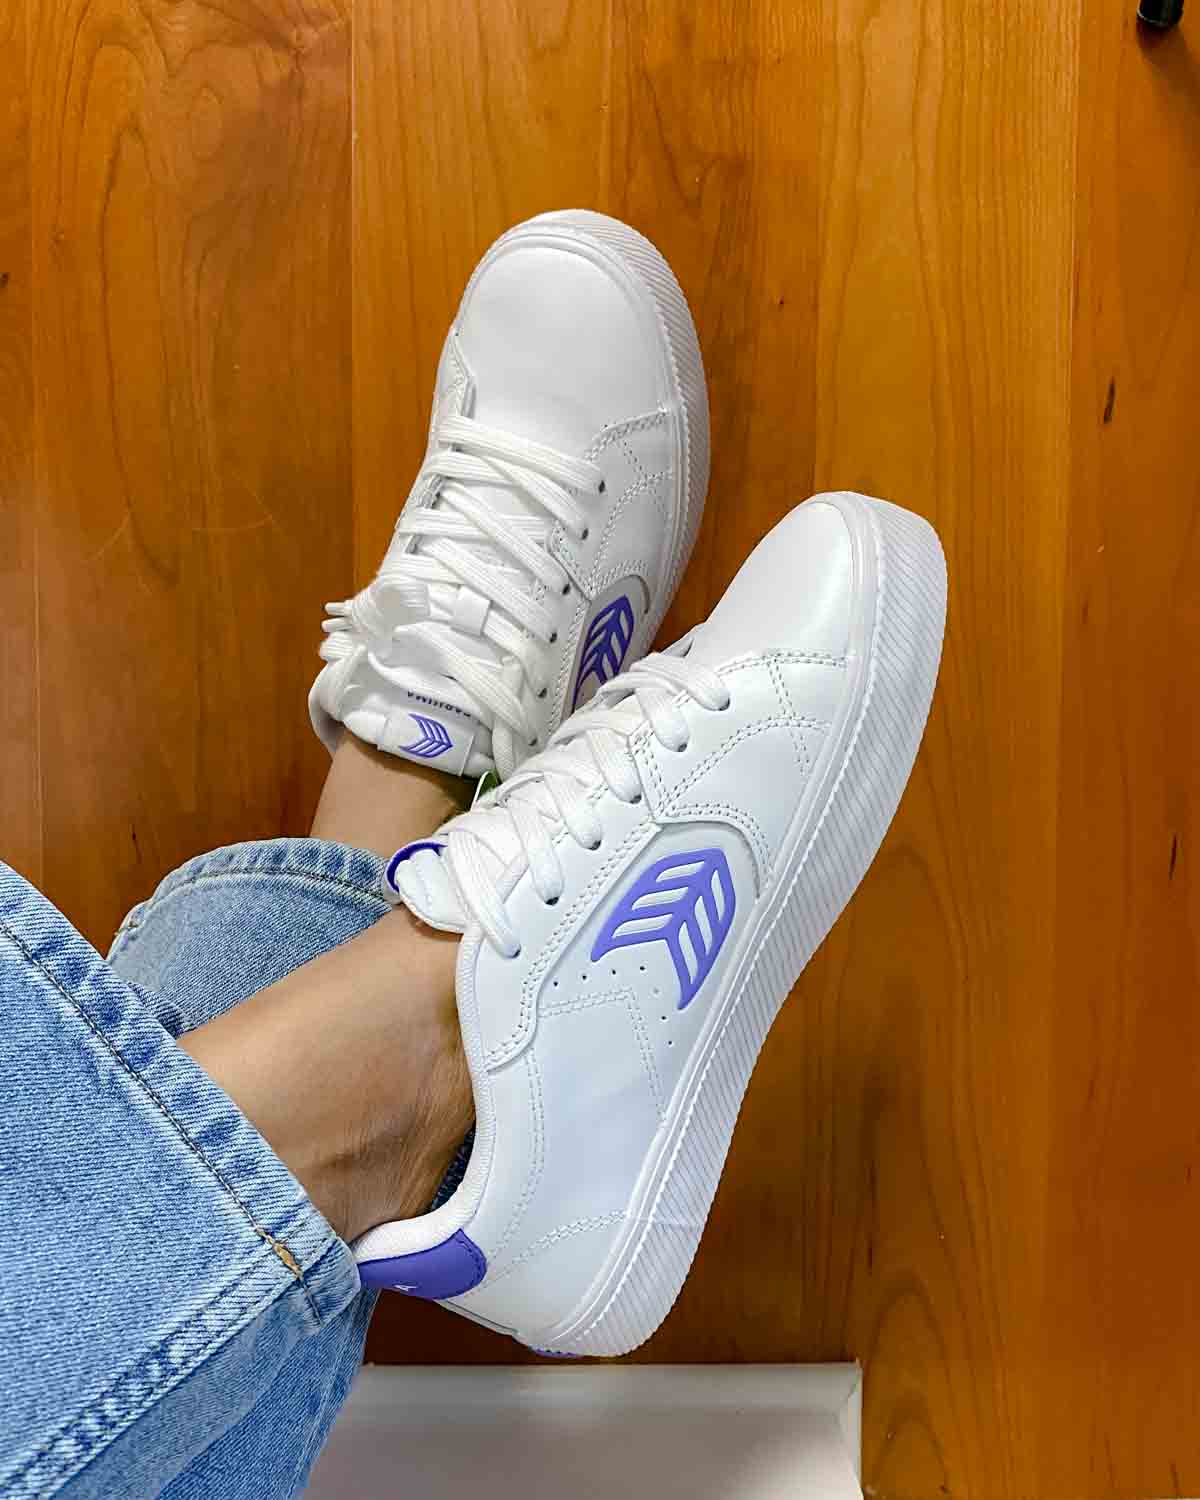 Cariuma Salvas sneakers in white leather with Veri Peri accents